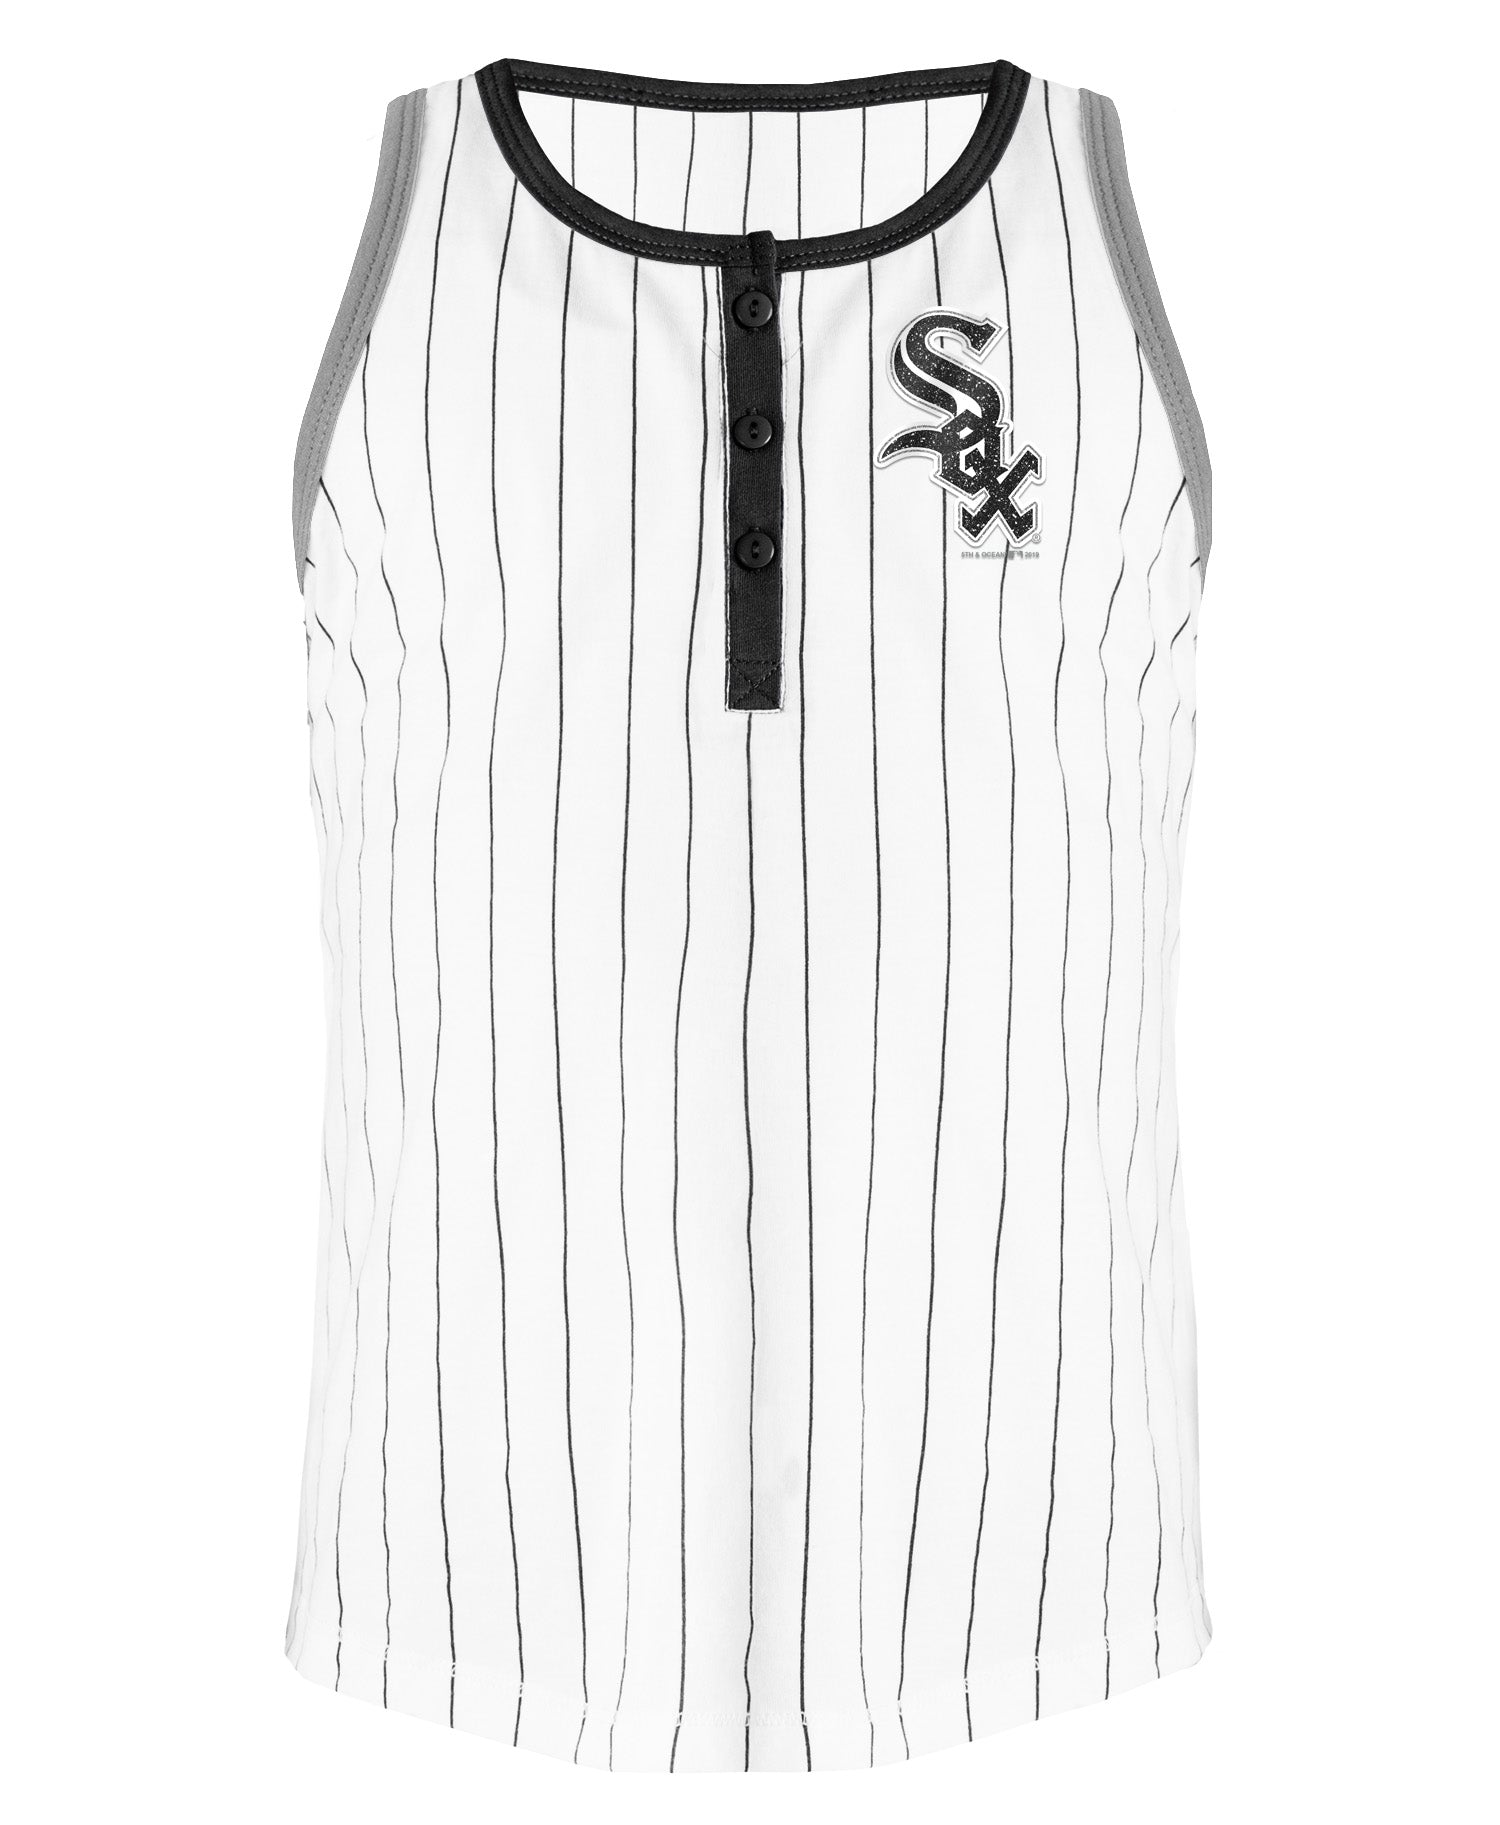 New Era Women's New York Yankees Gameday Pinstripe Tank Top - White - S Each